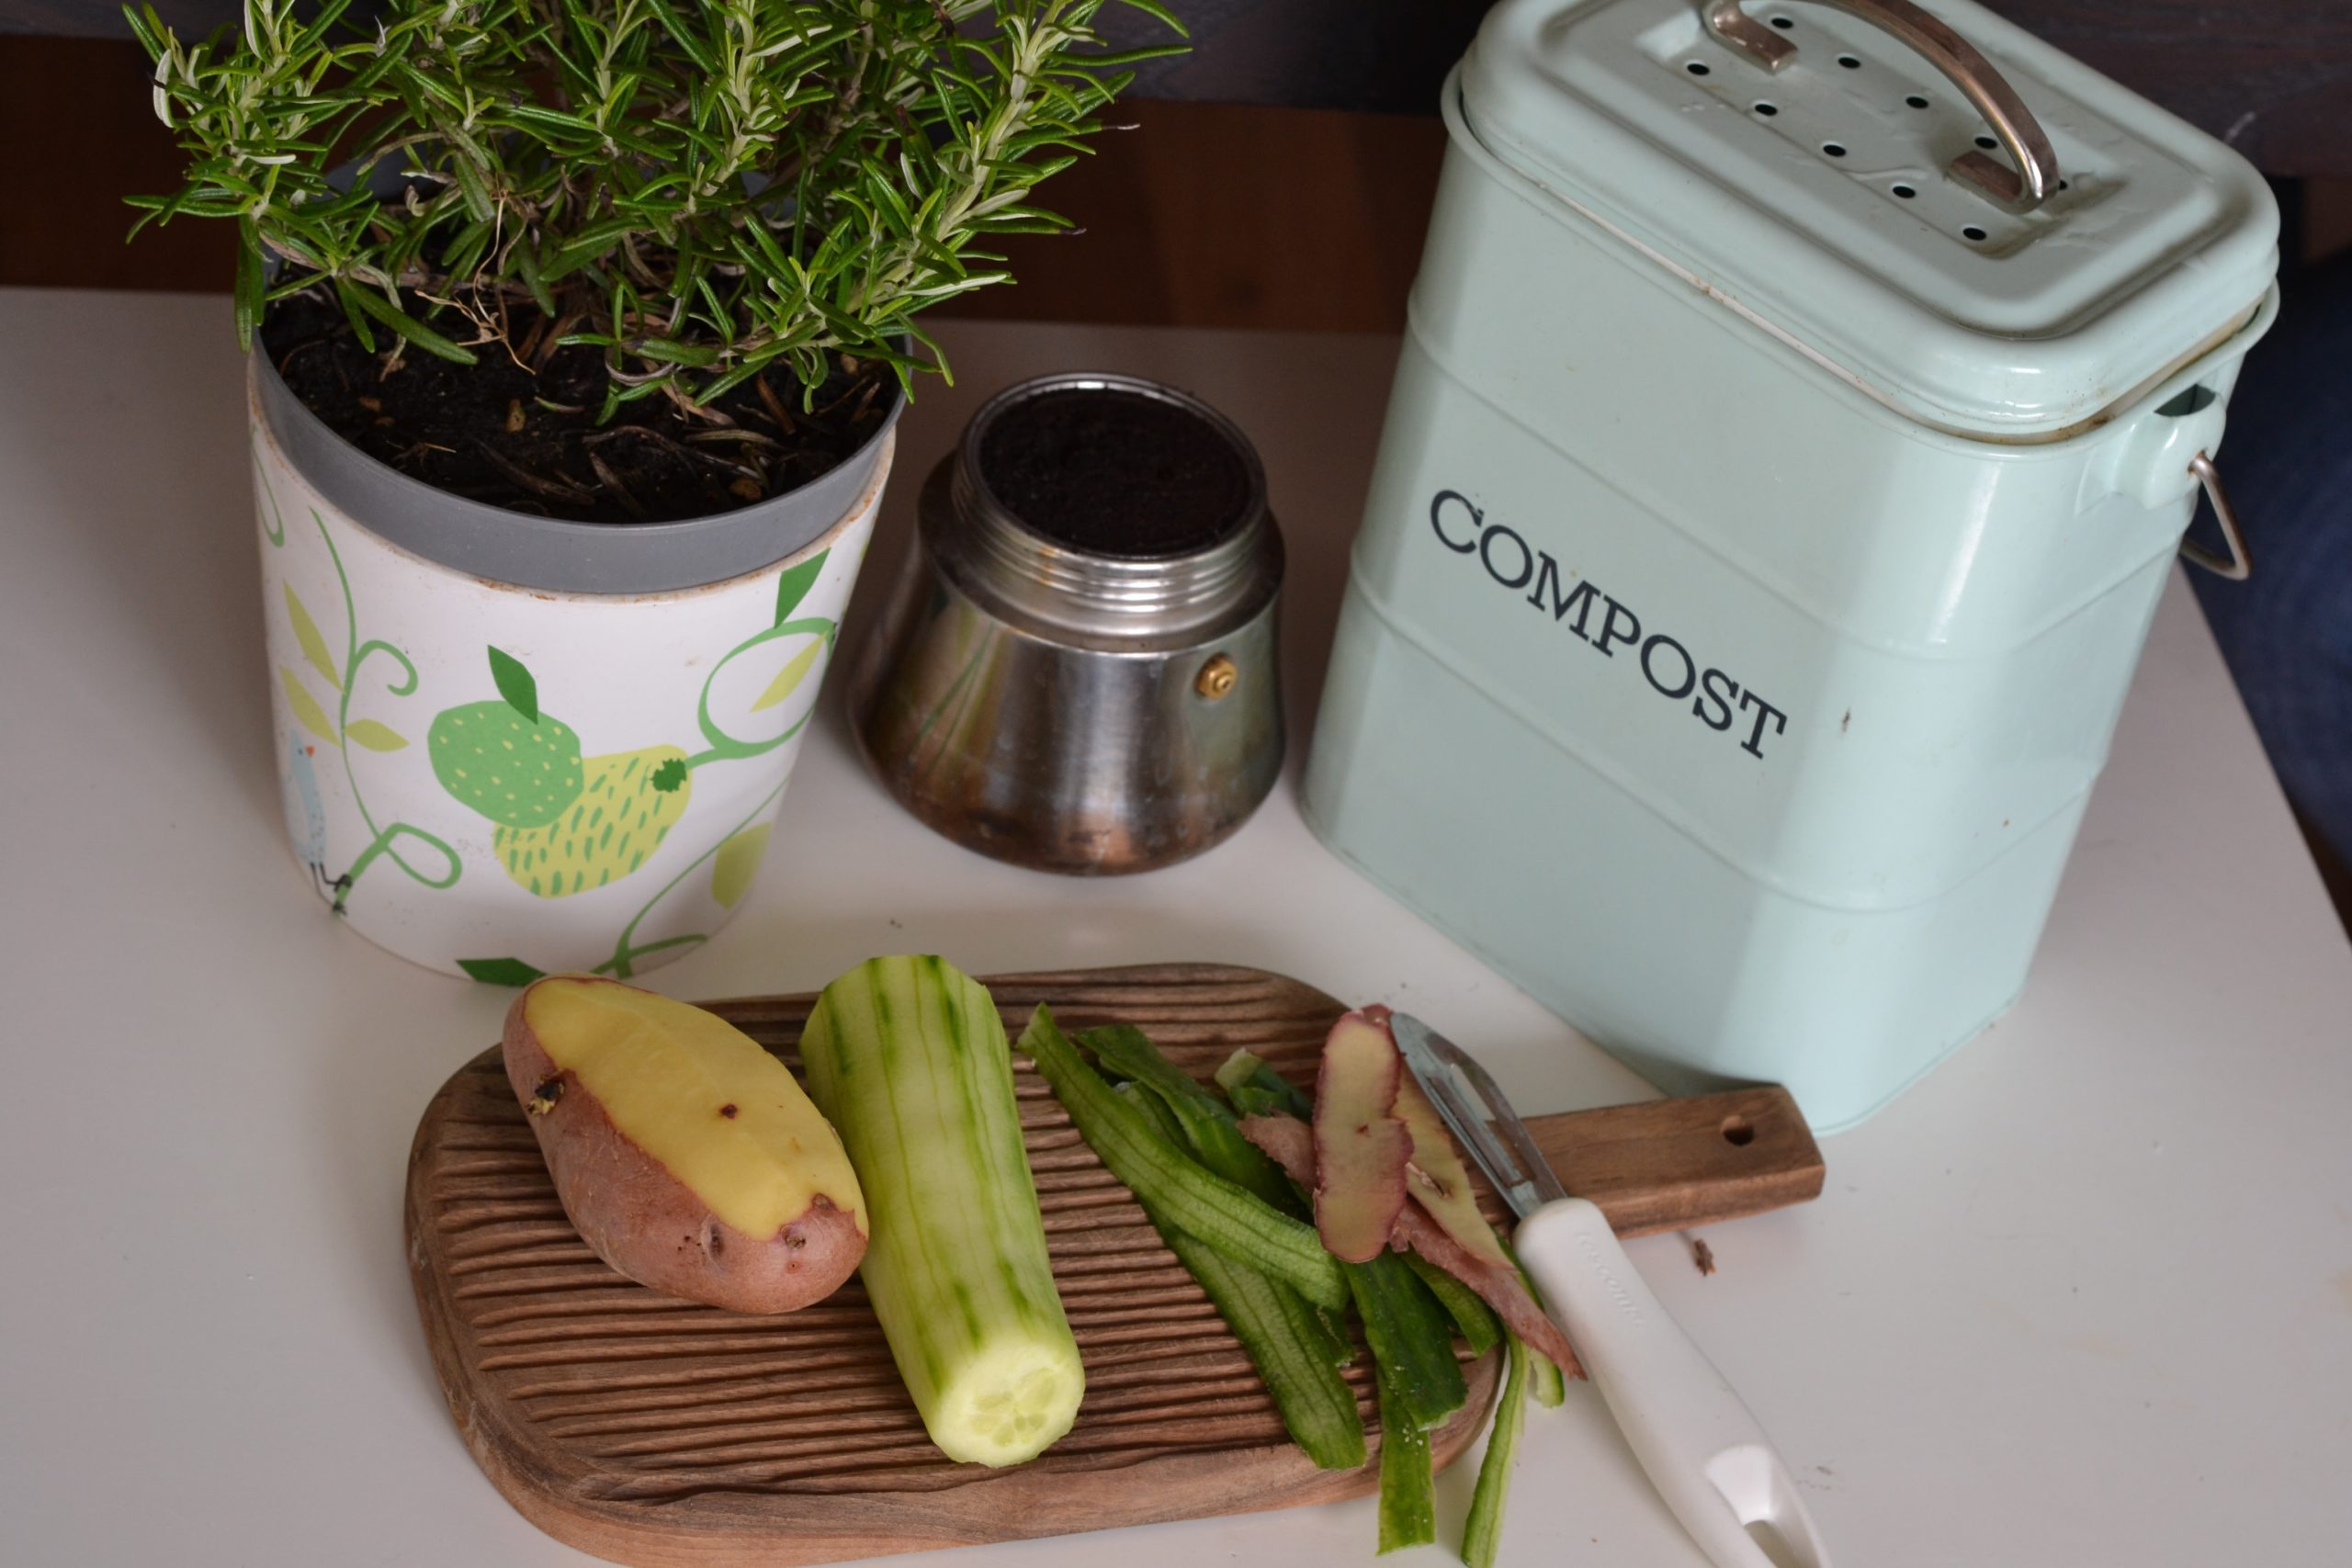 Kitchen Composting